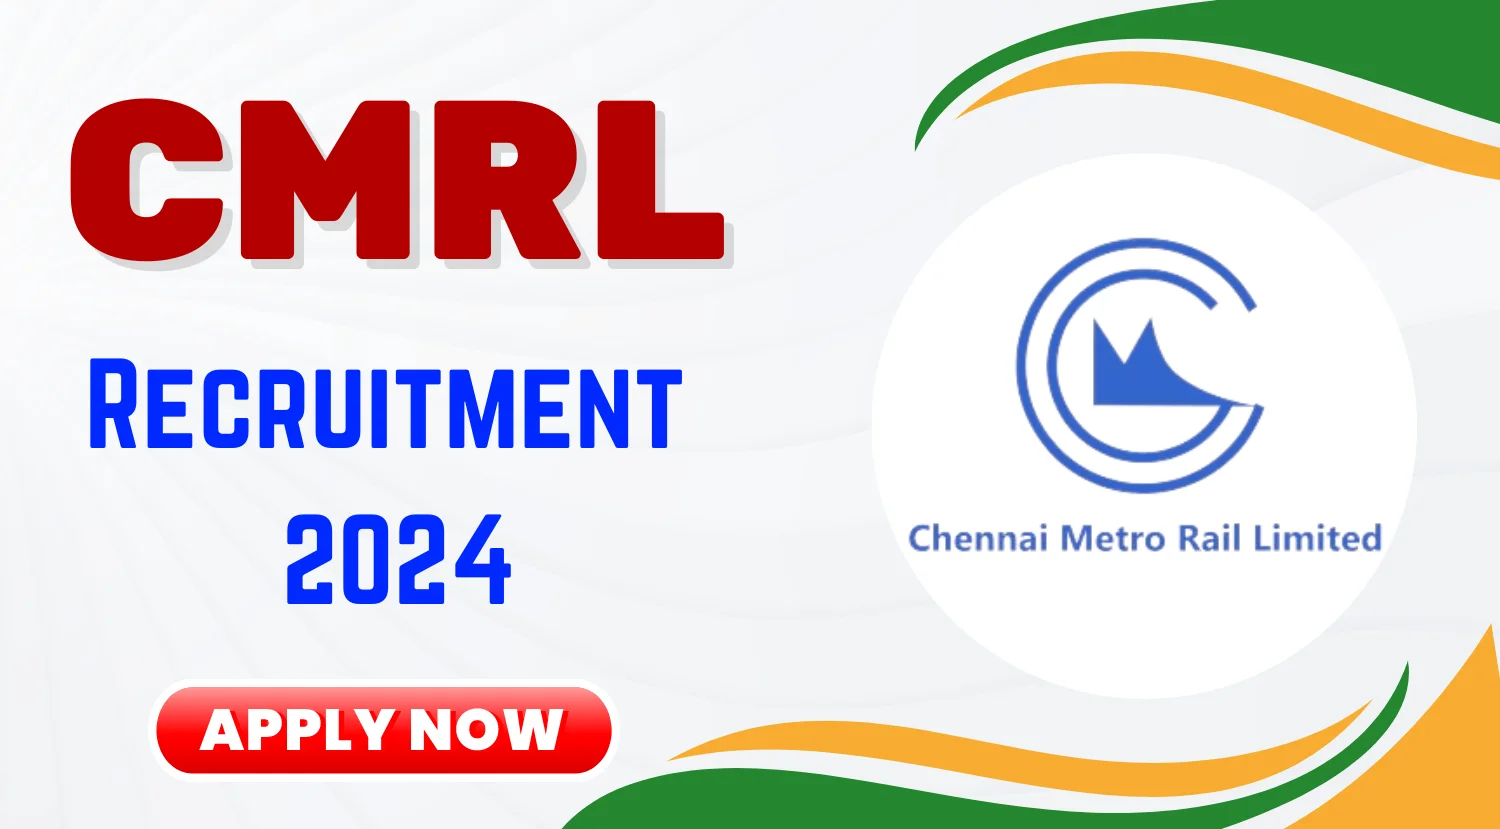 CMRL General Manager Recruitment 2024